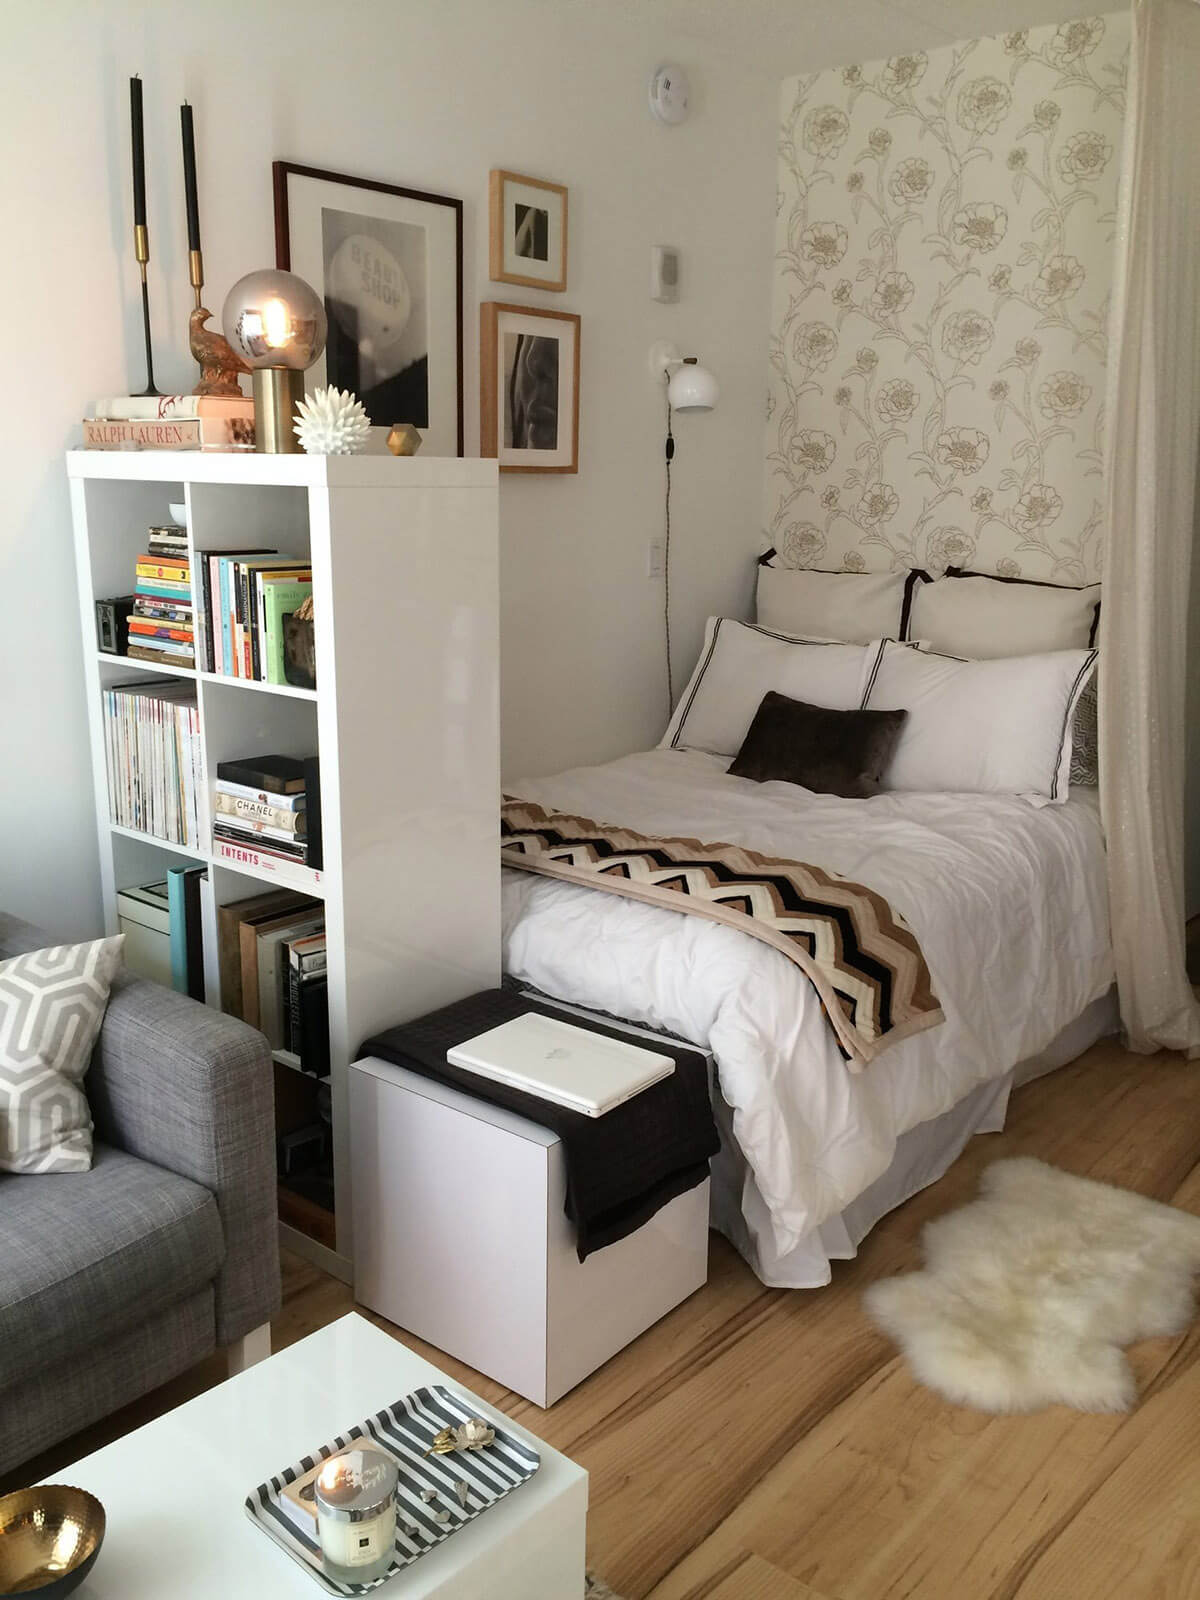 Small single bedroom decorating ideas